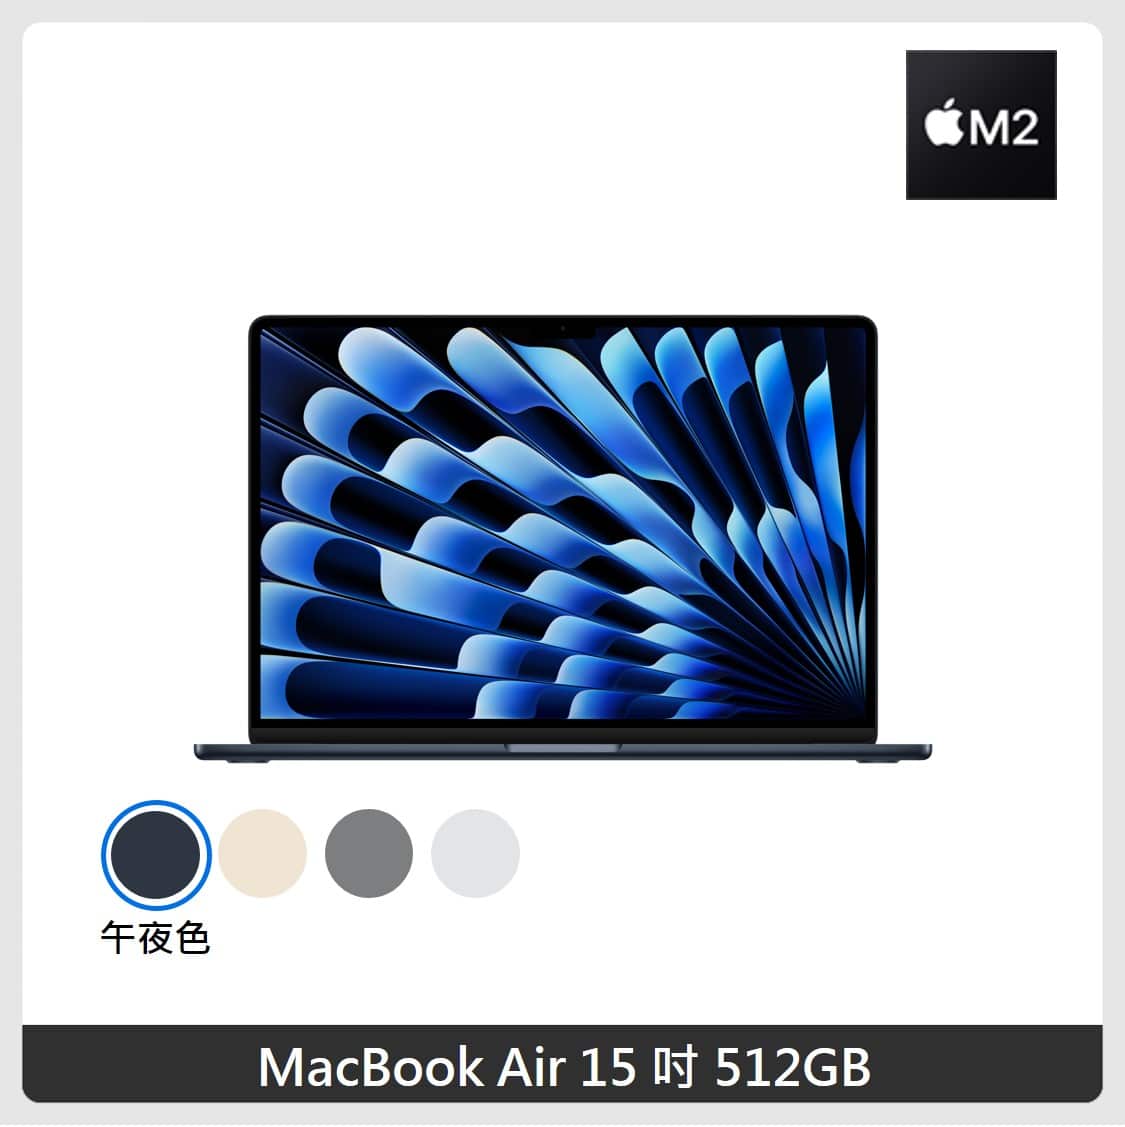 Macbook Air M2 15吋 512GB 午夜色